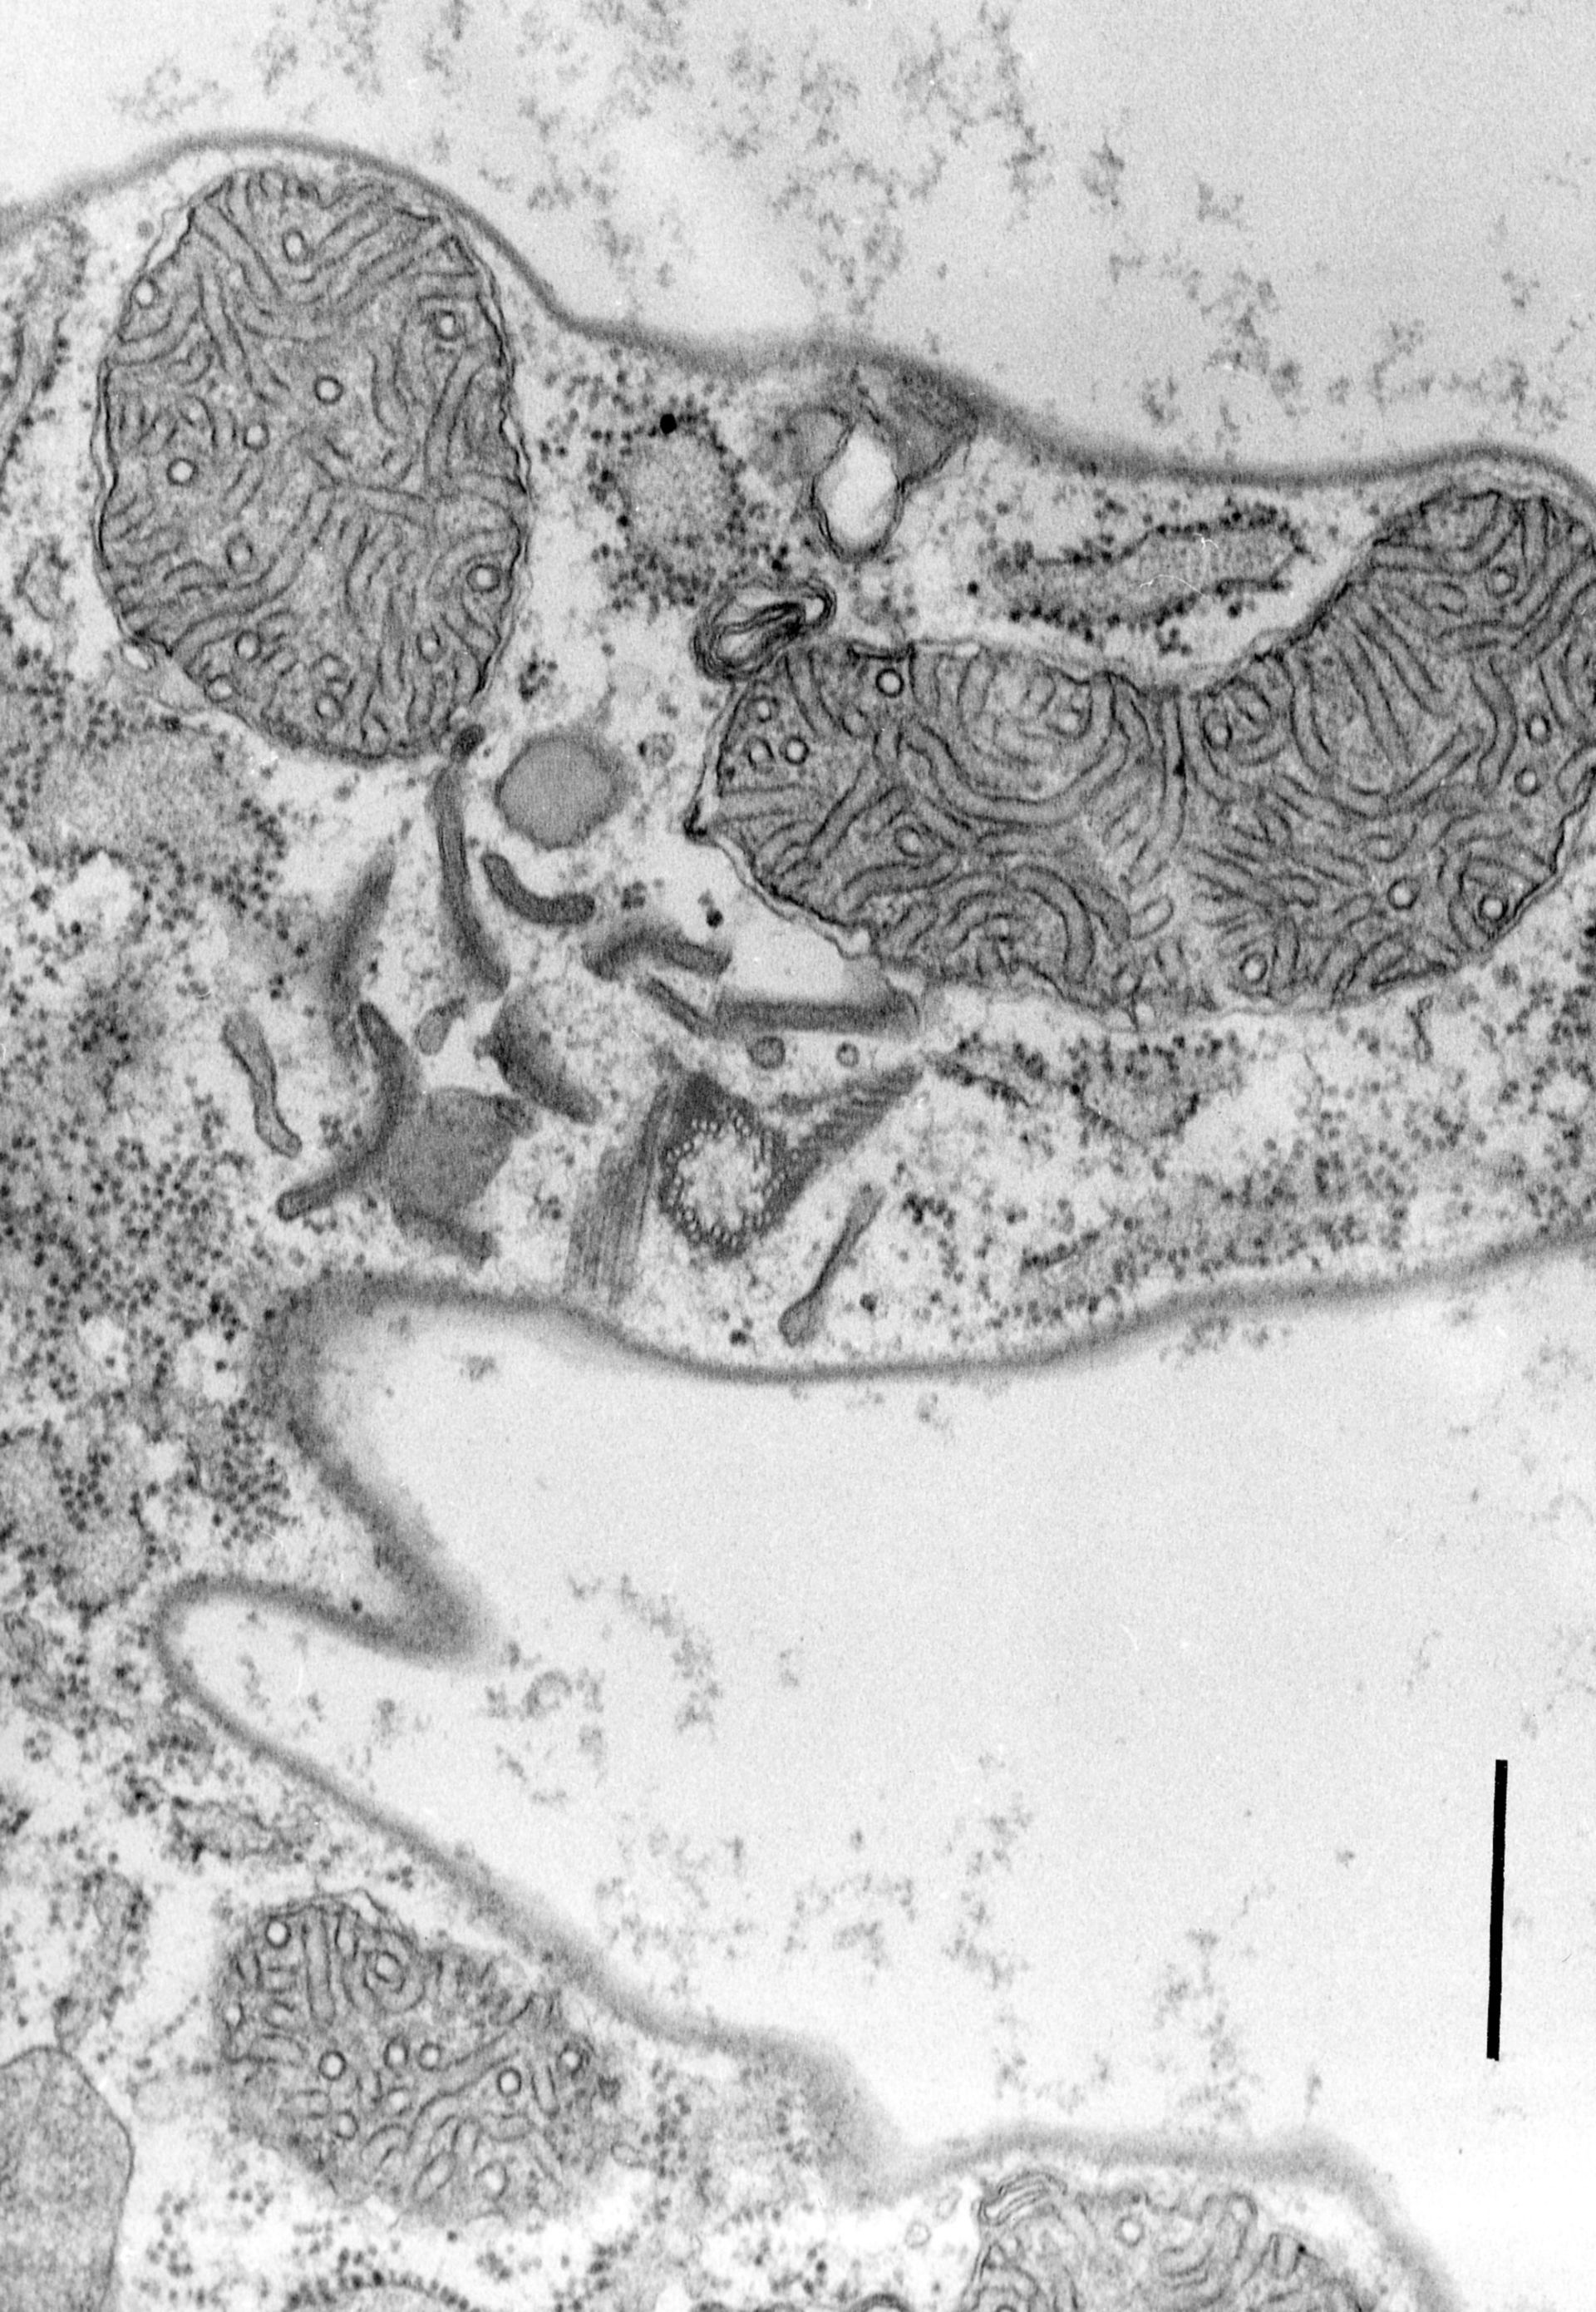 Coleps hirtus (Tubular mitochondria) - CIL:9720